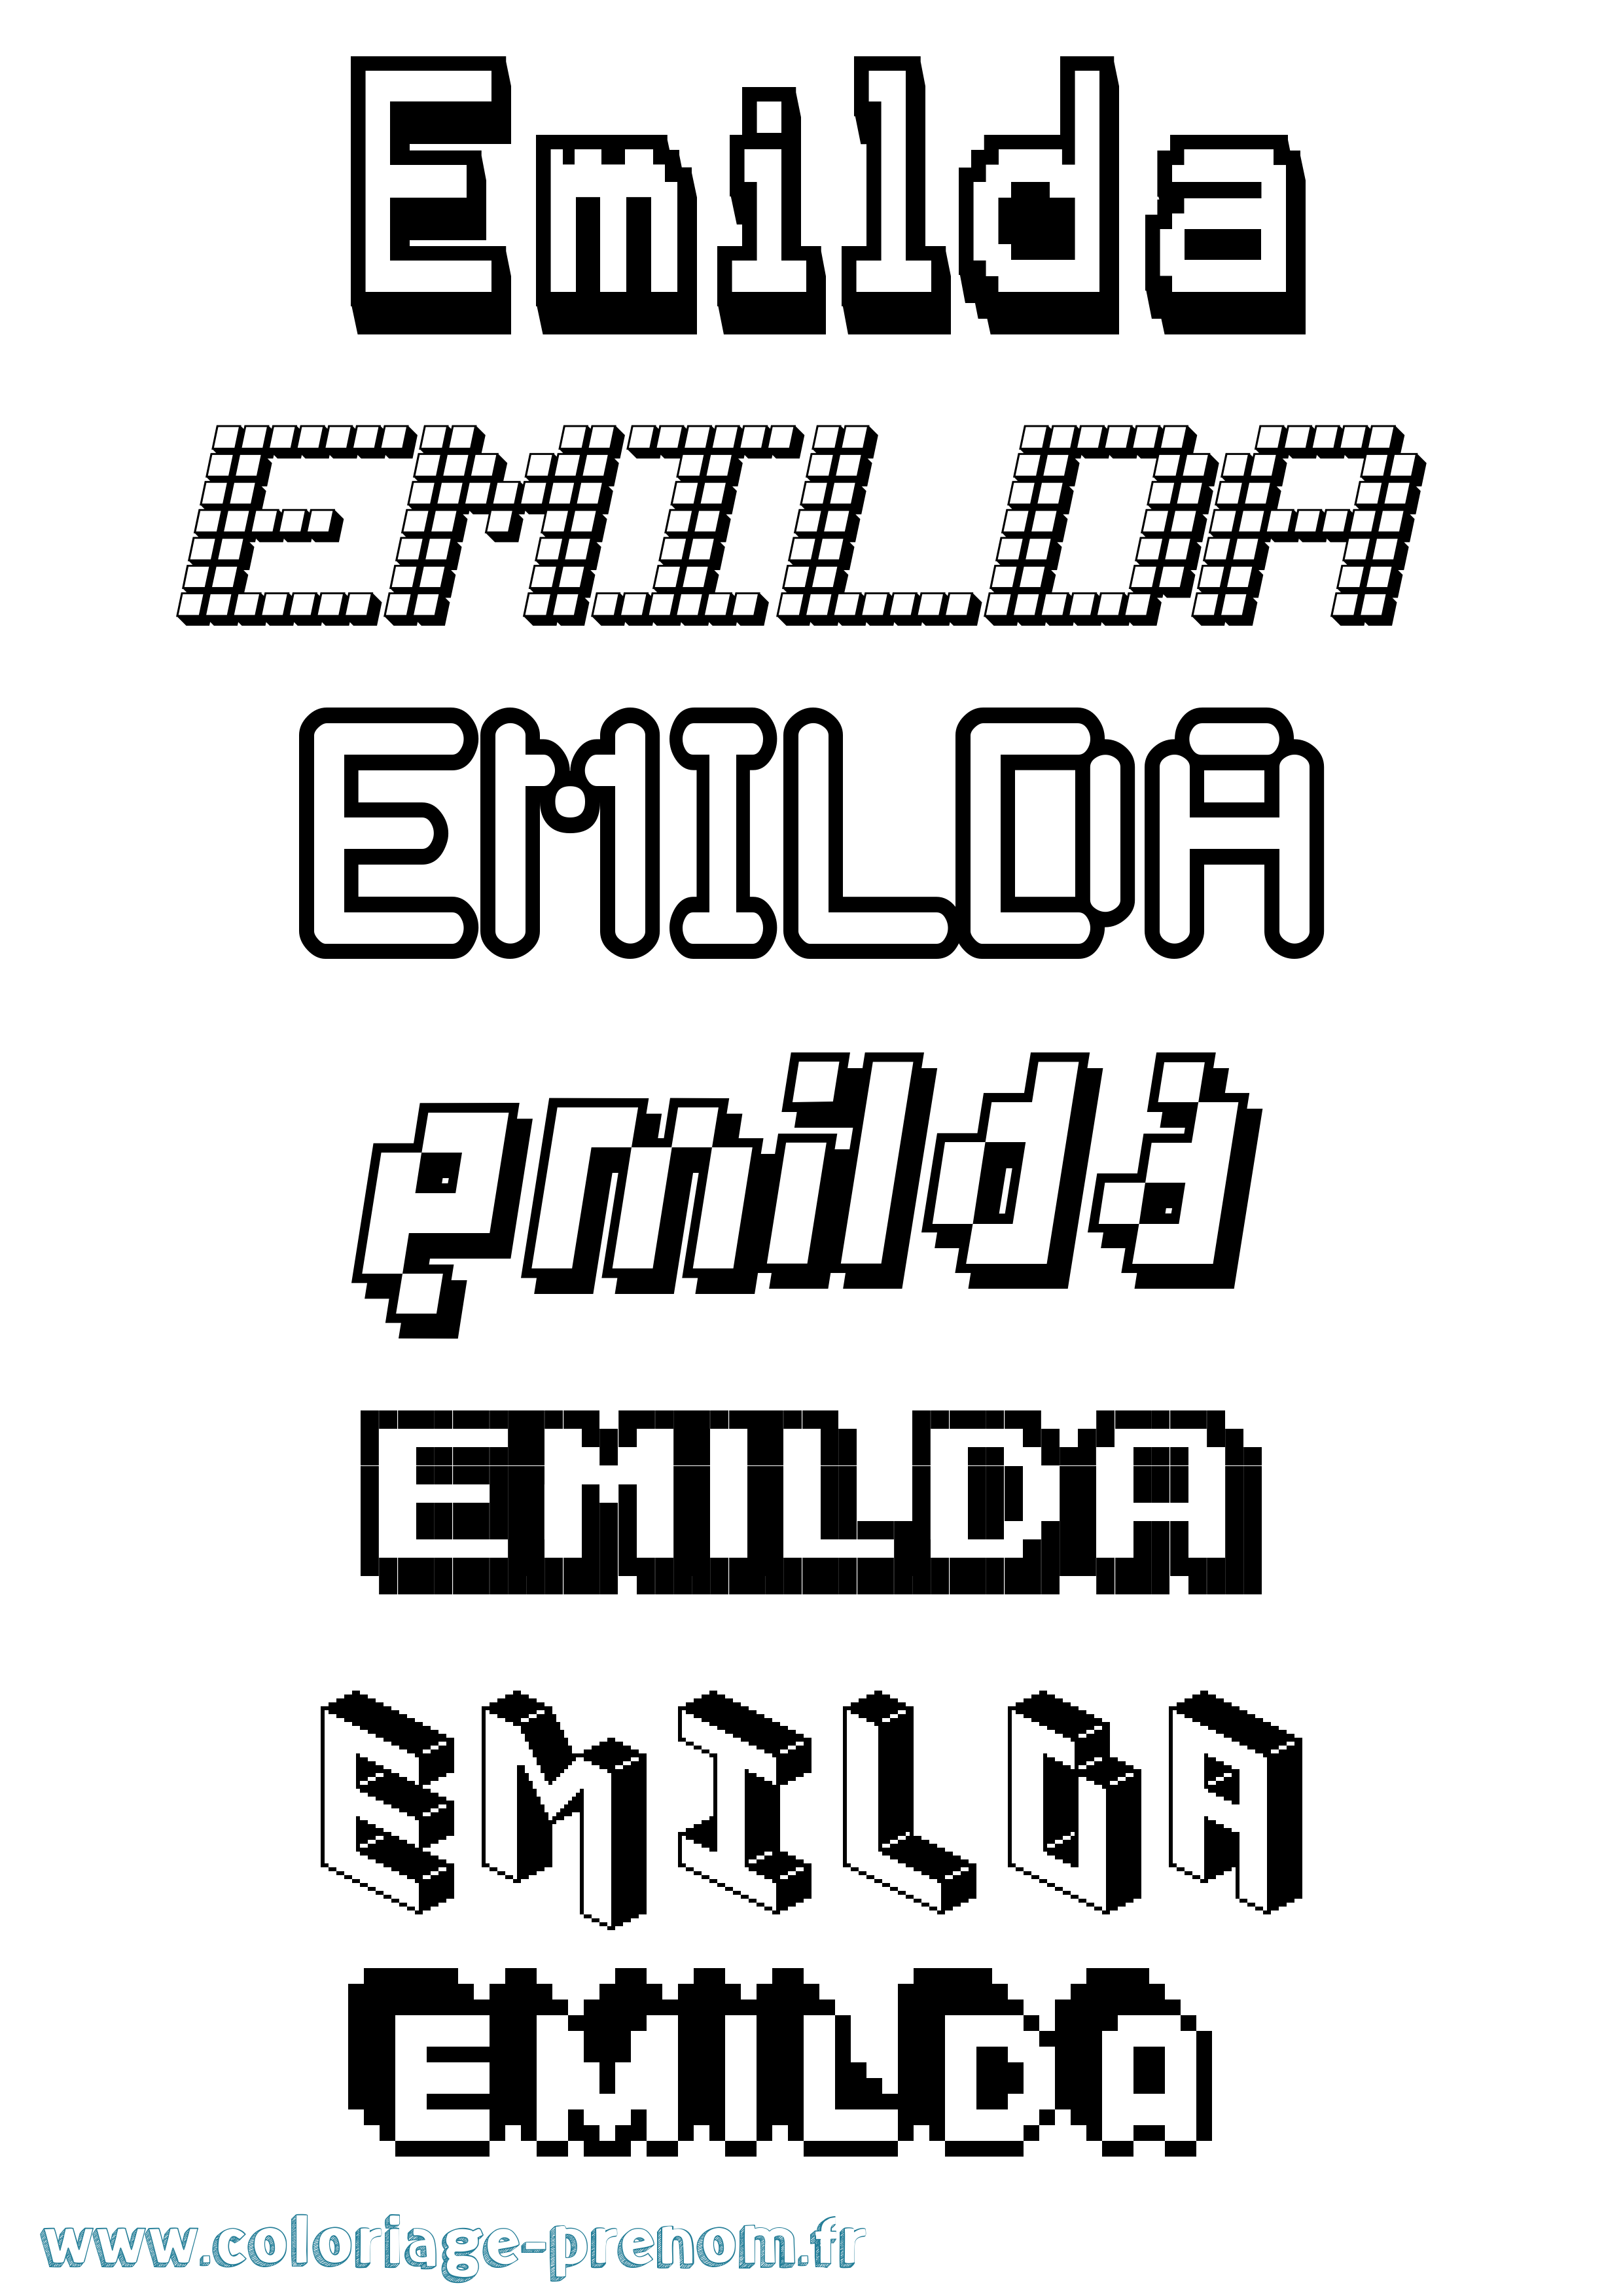 Coloriage prénom Emilda Pixel